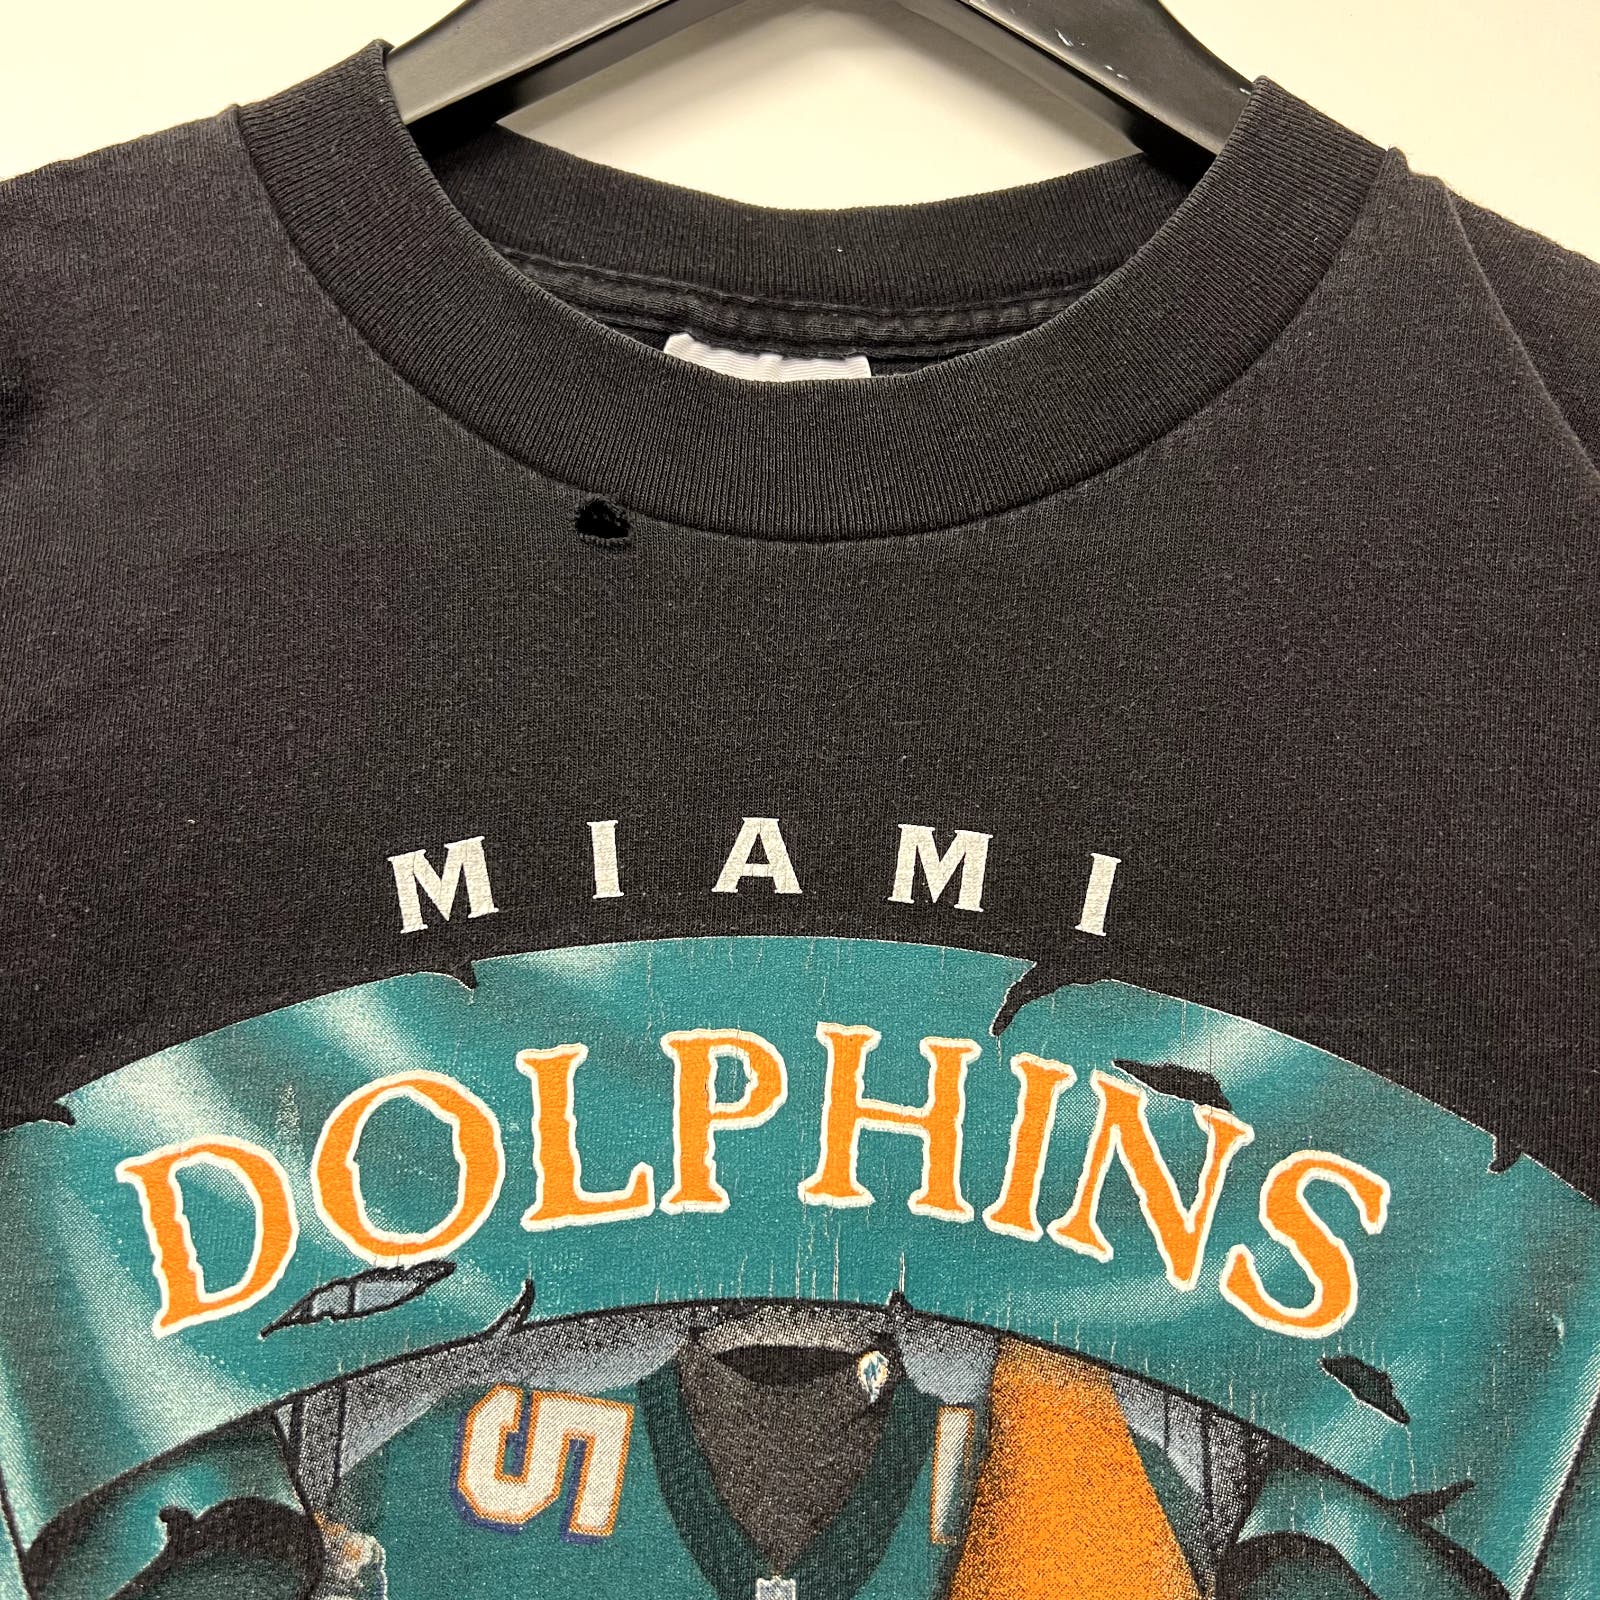 Vintage 1998 NFL Miami Dolphins Riddell Black T-Shirt Size XL Locker Room